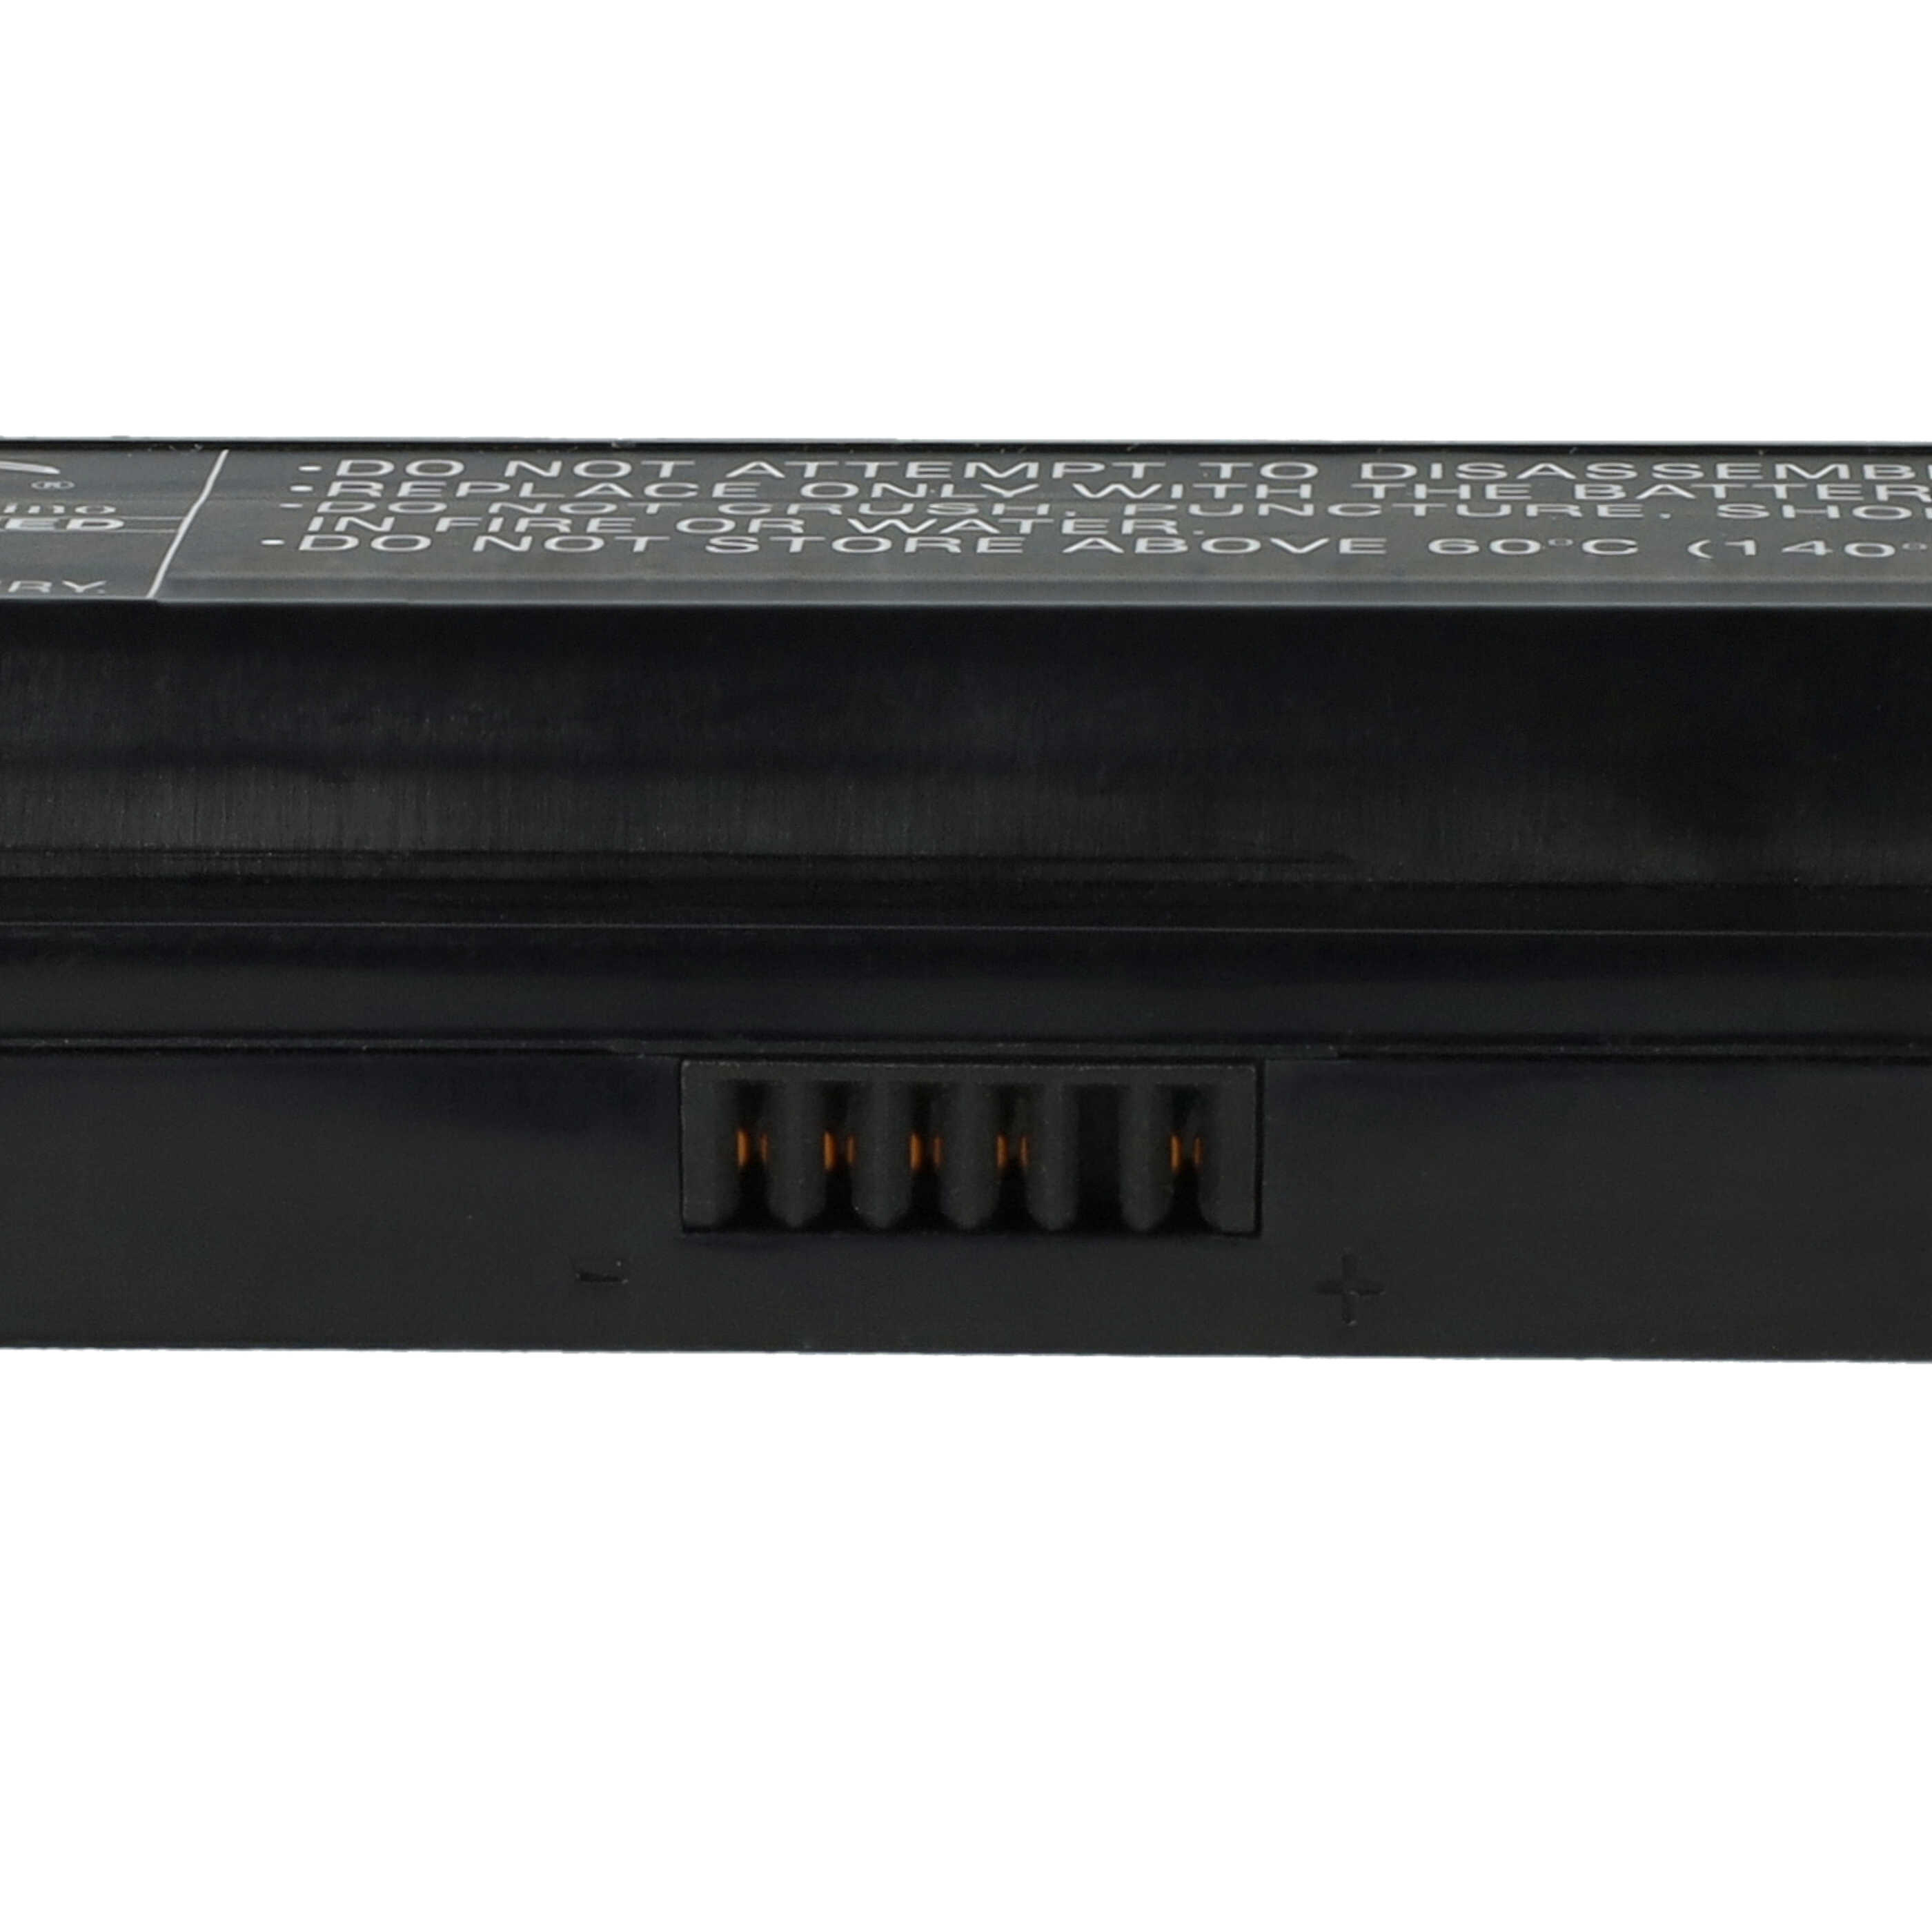 Batería reemplaza Clevo 6-87-N350S-4D7, 6-87-N350S-4D8, N350BAT-6 para notebook Clevo - 5200 mAh 11,1 V Li-Ion